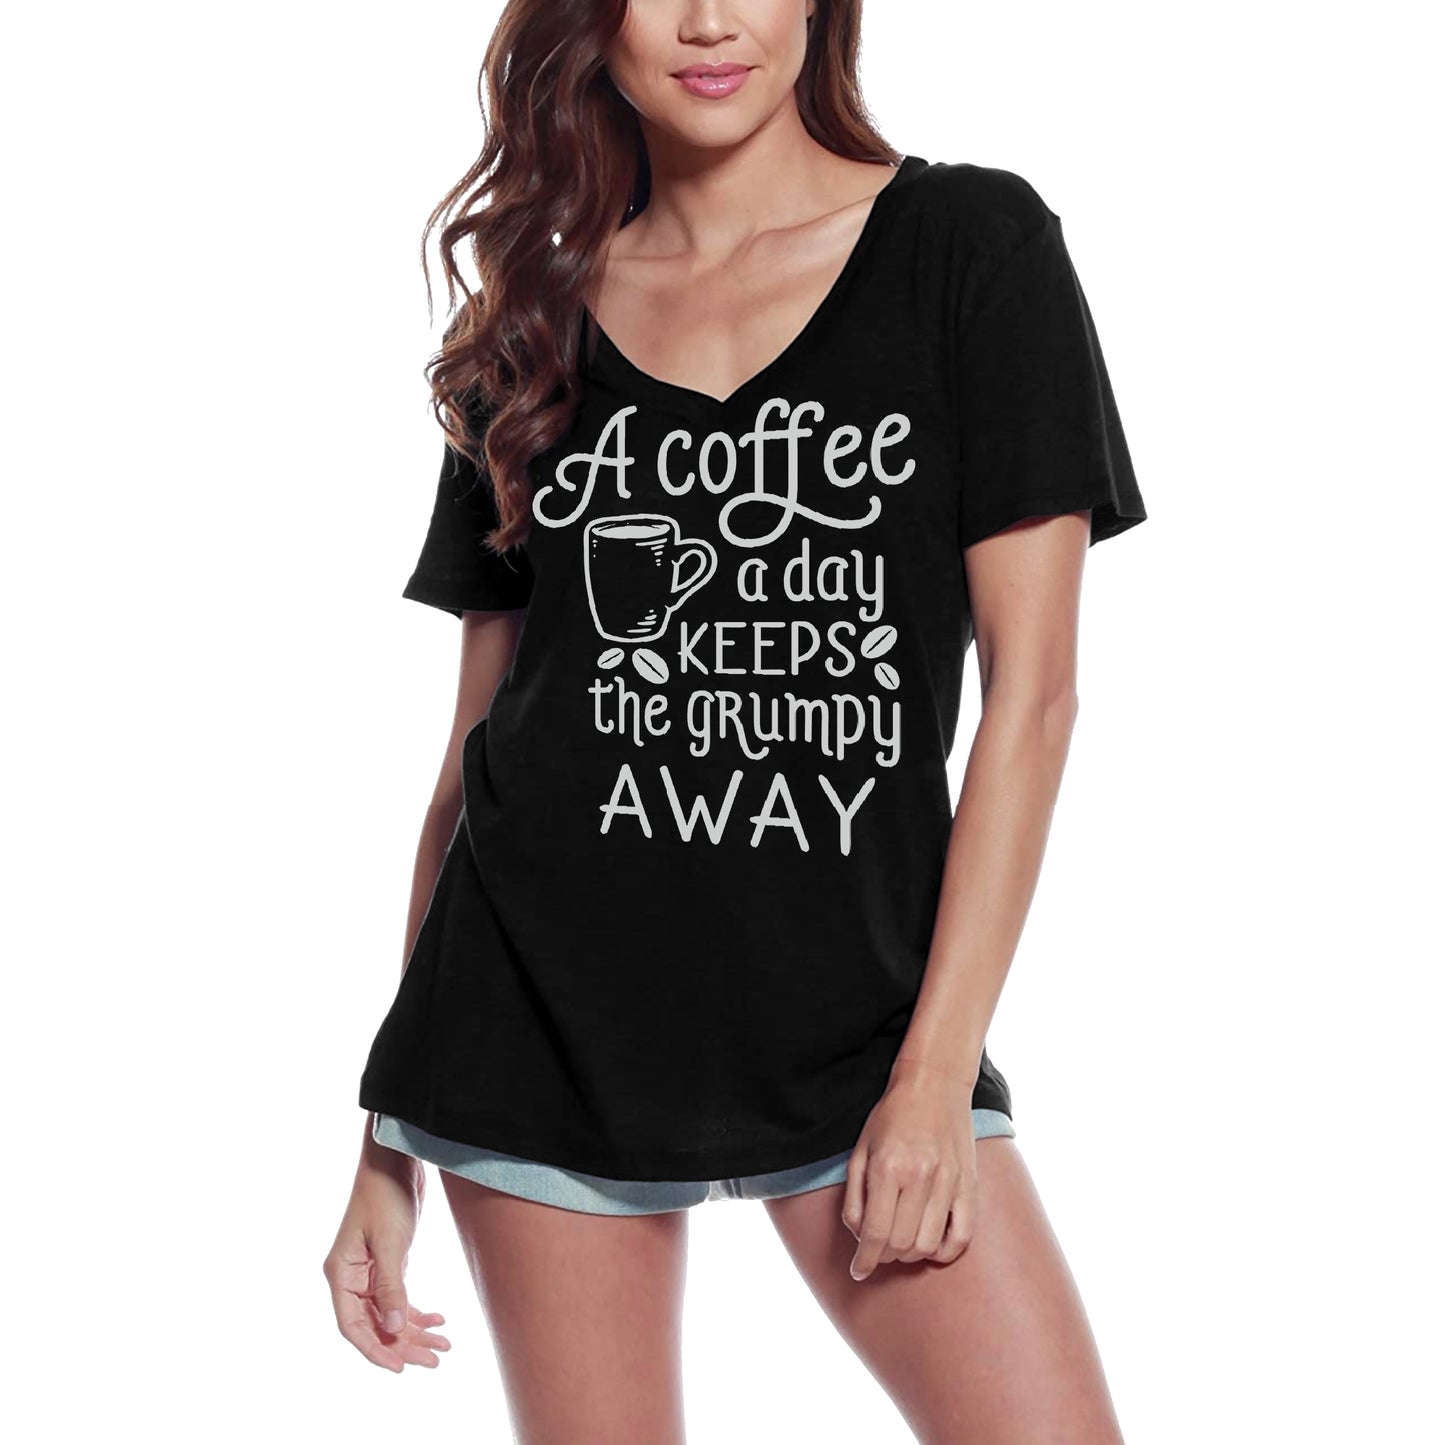 ULTRABASIC Women's T-Shirt A Coffee a Day Keeps the Grumpy Away - Funny Tee Shirt